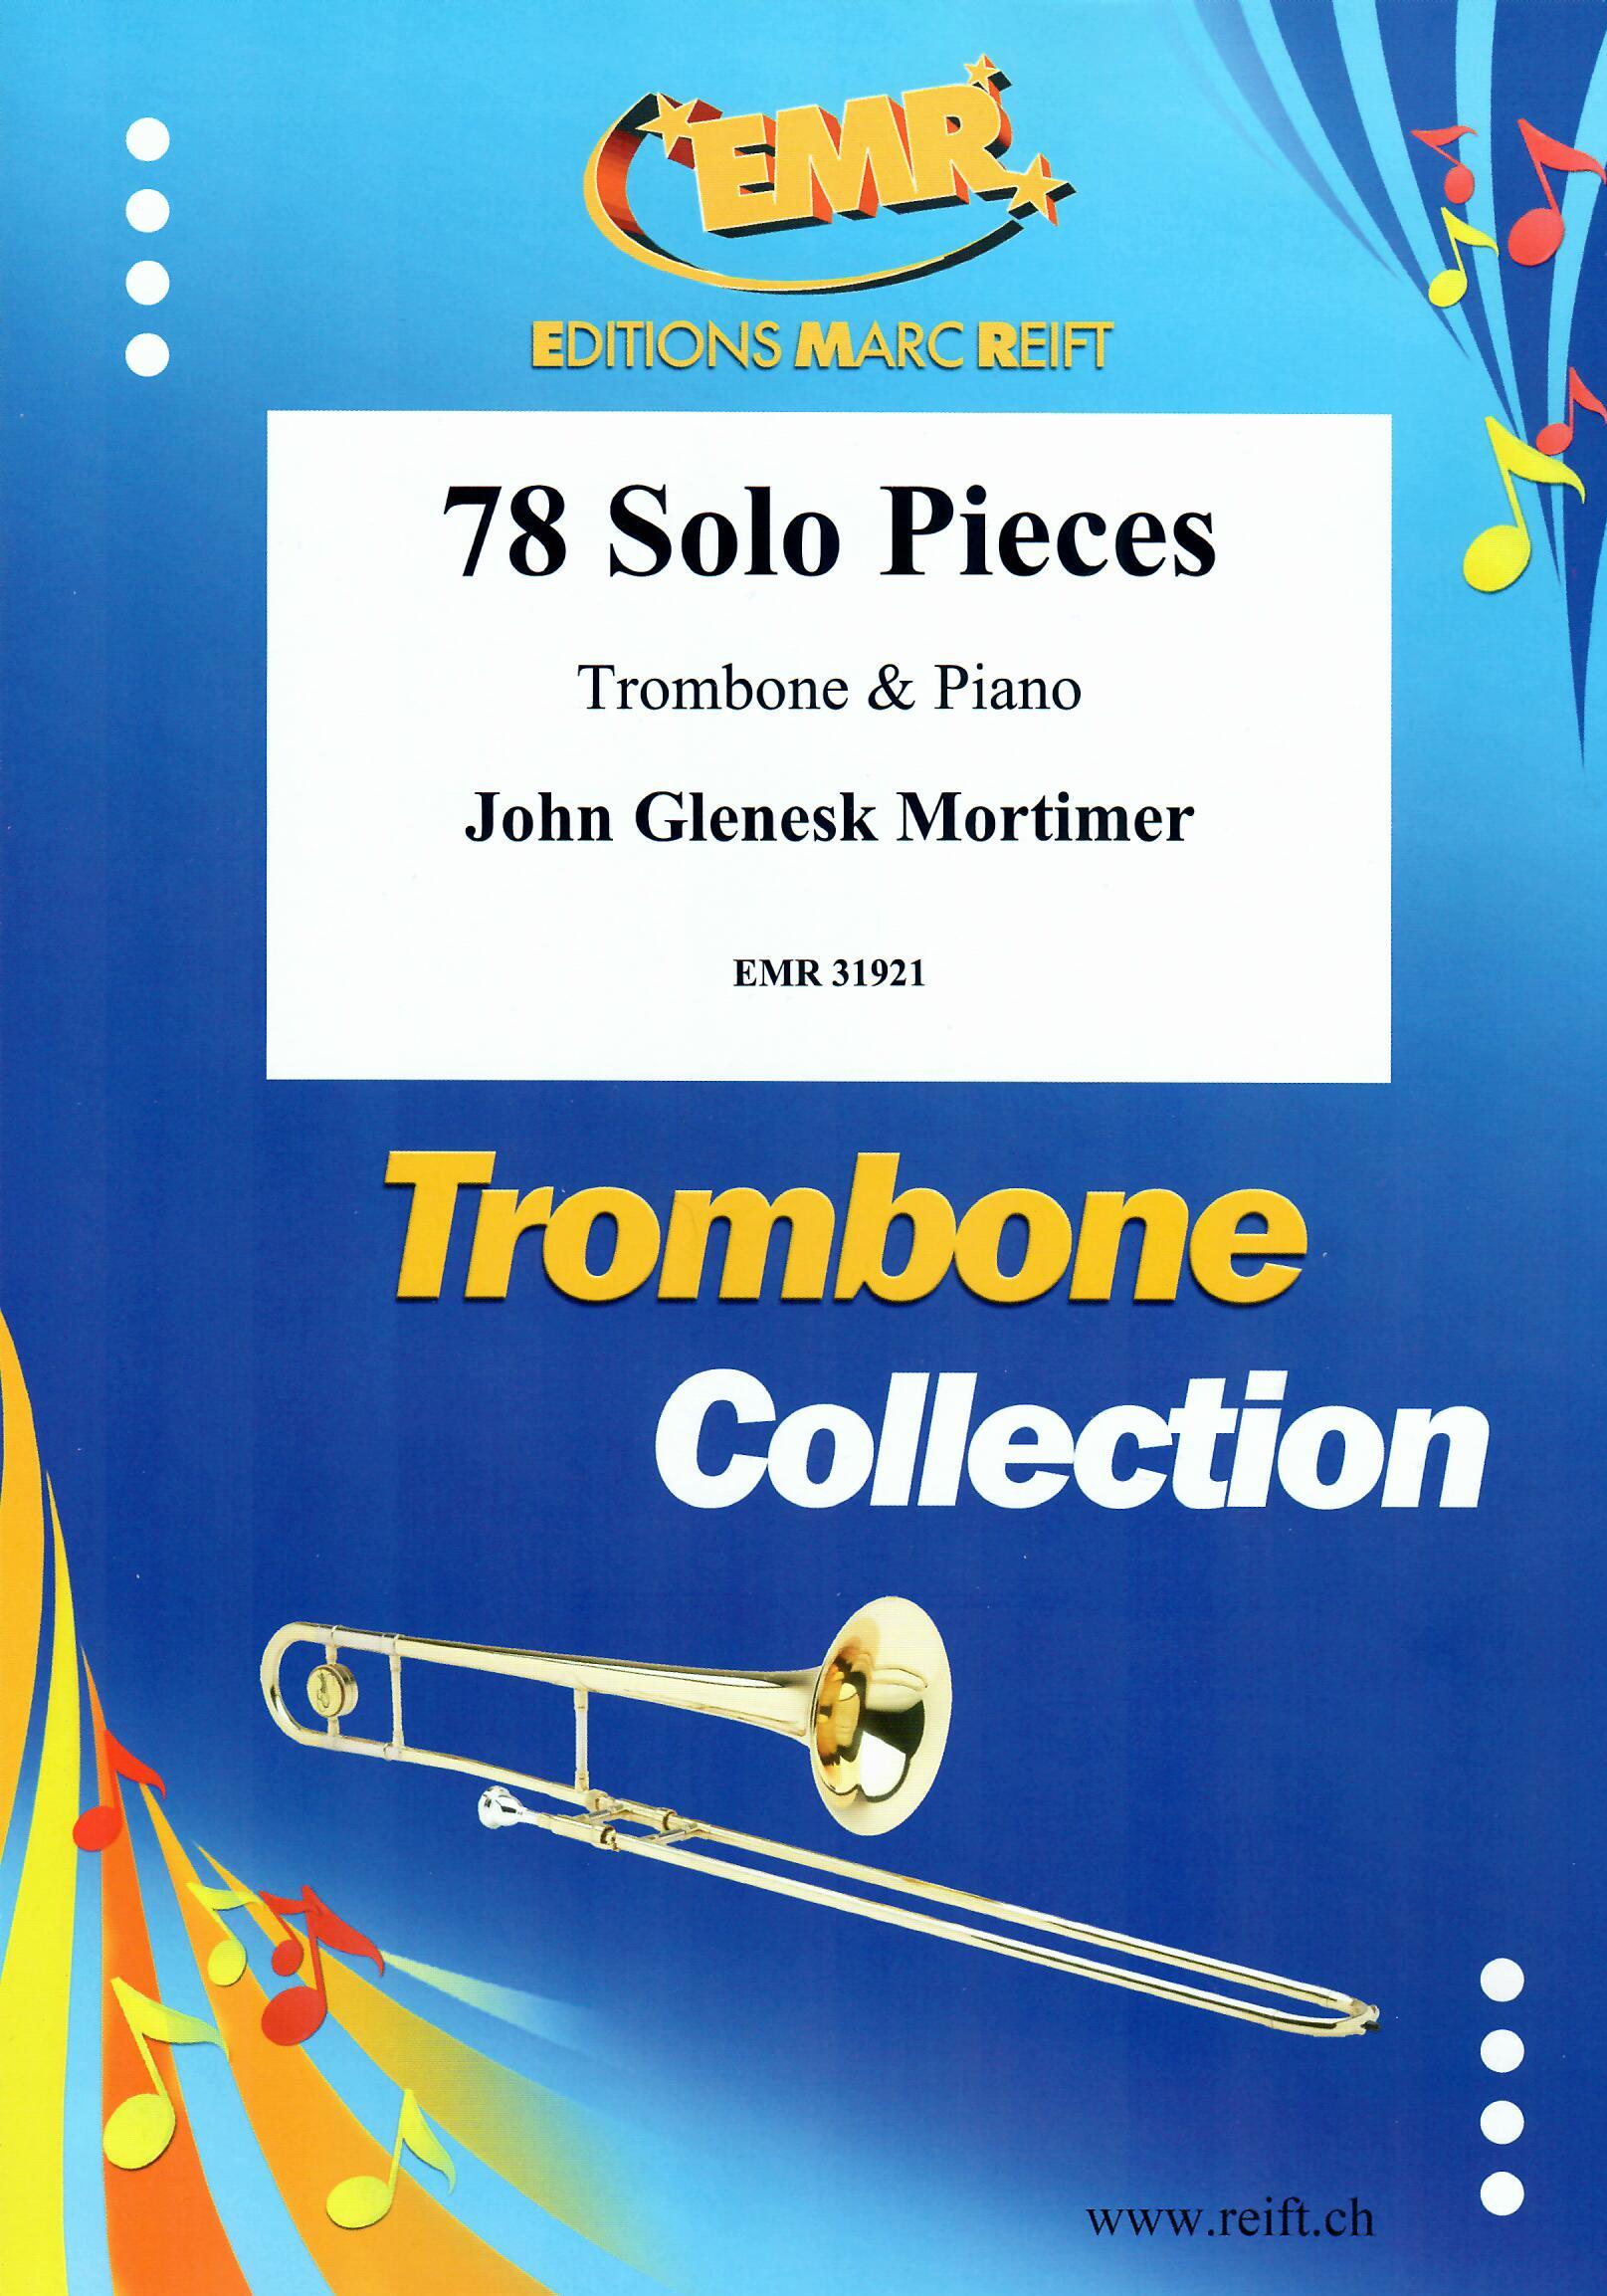 78 SOLO PIECES, SOLOS - Trombone